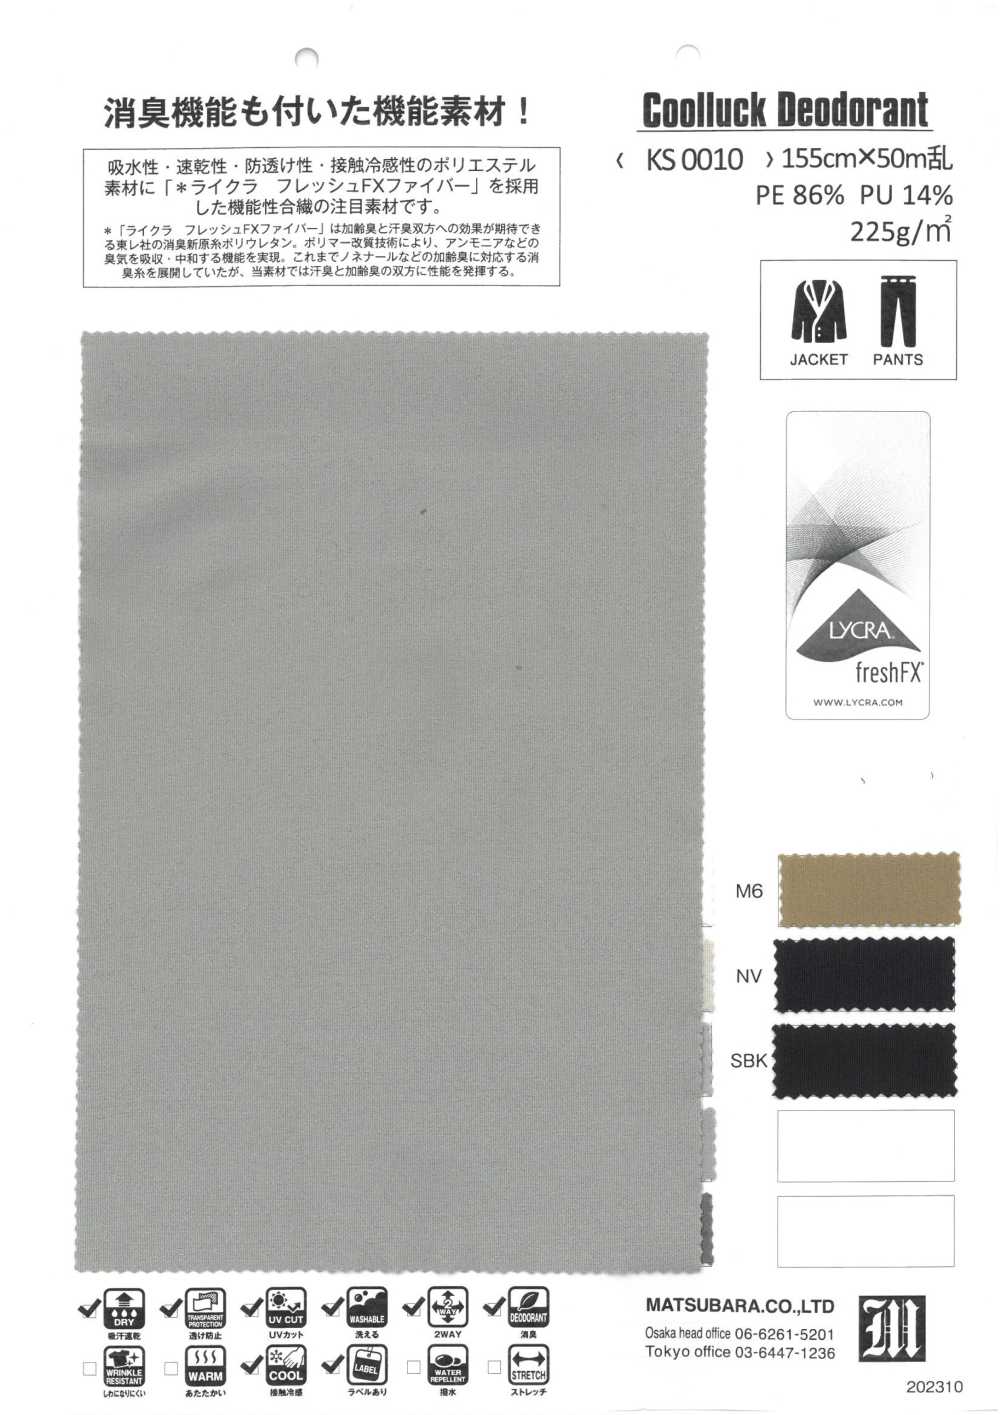 KS0010 Colluck Deodorant[Textile / Fabric] Matsubara